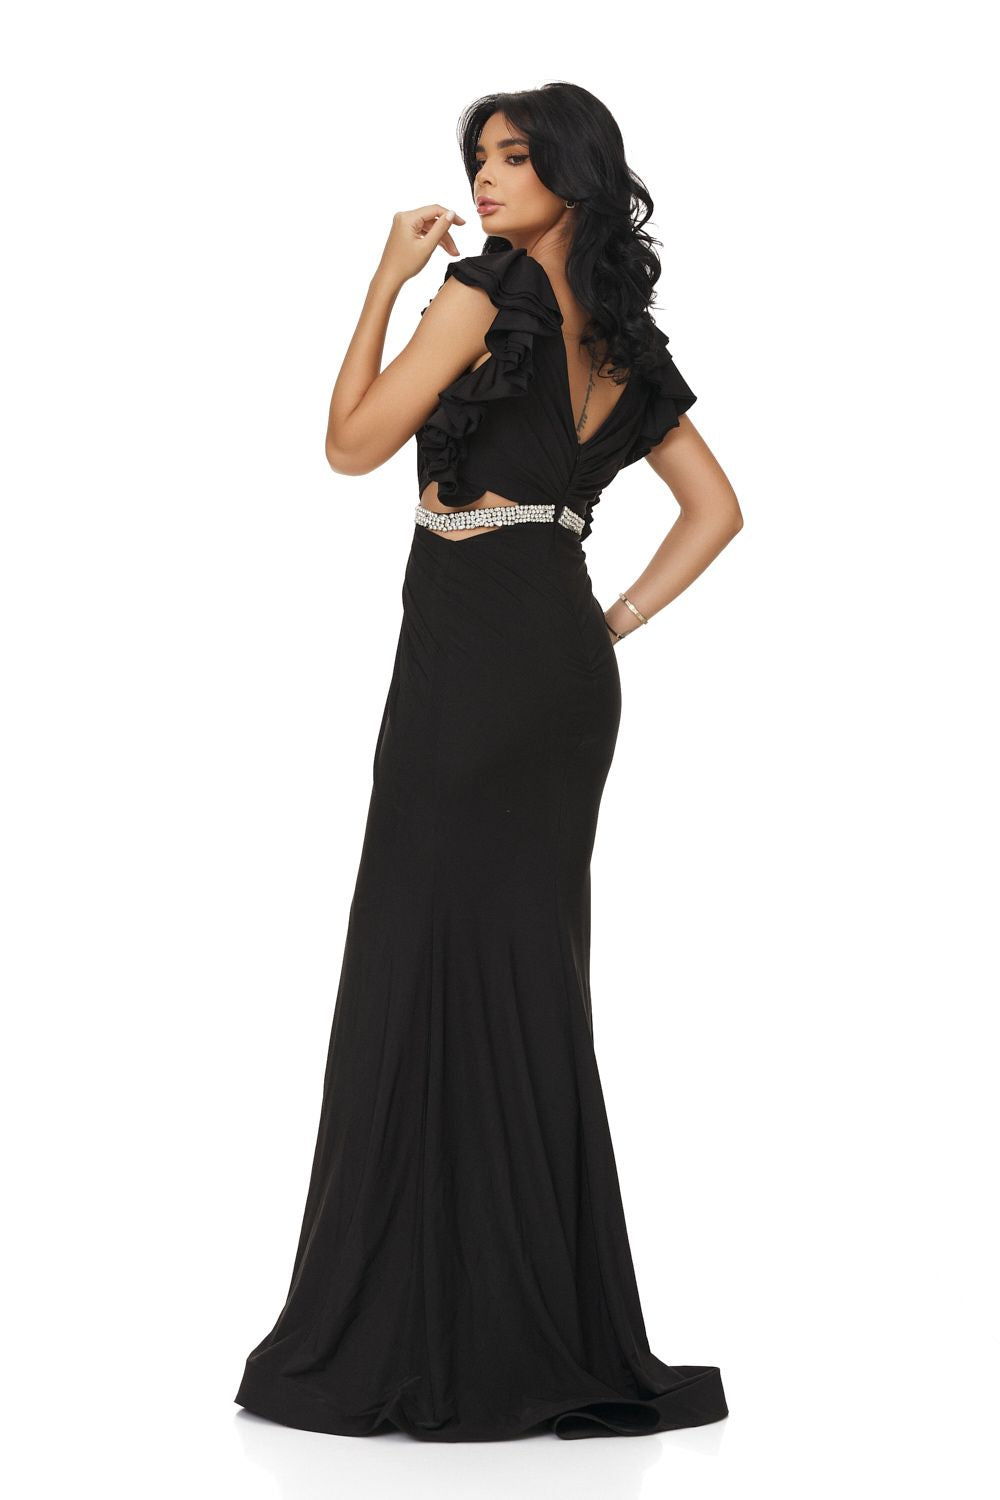 Helisay Bogas hosszú fekete női ruha